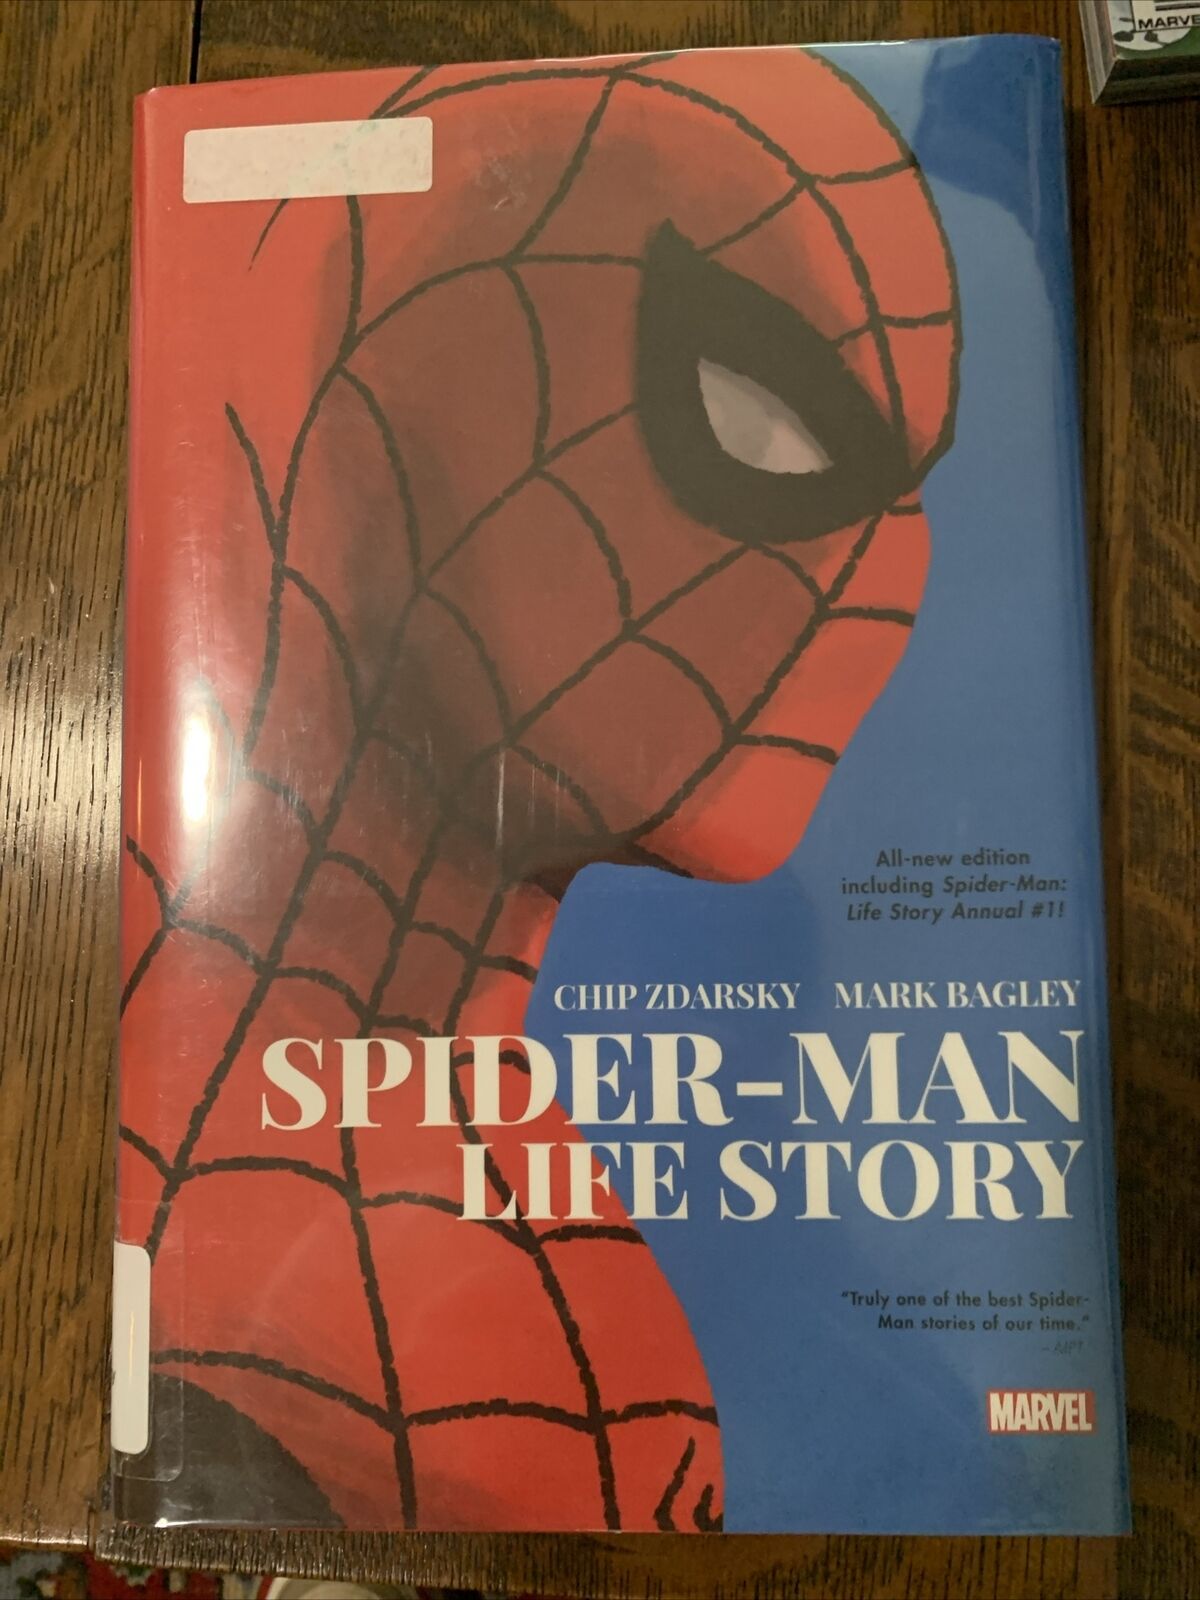 Spider-Man: Life Story by Chip Zdarsky (2021, Marvel, Hardcover)